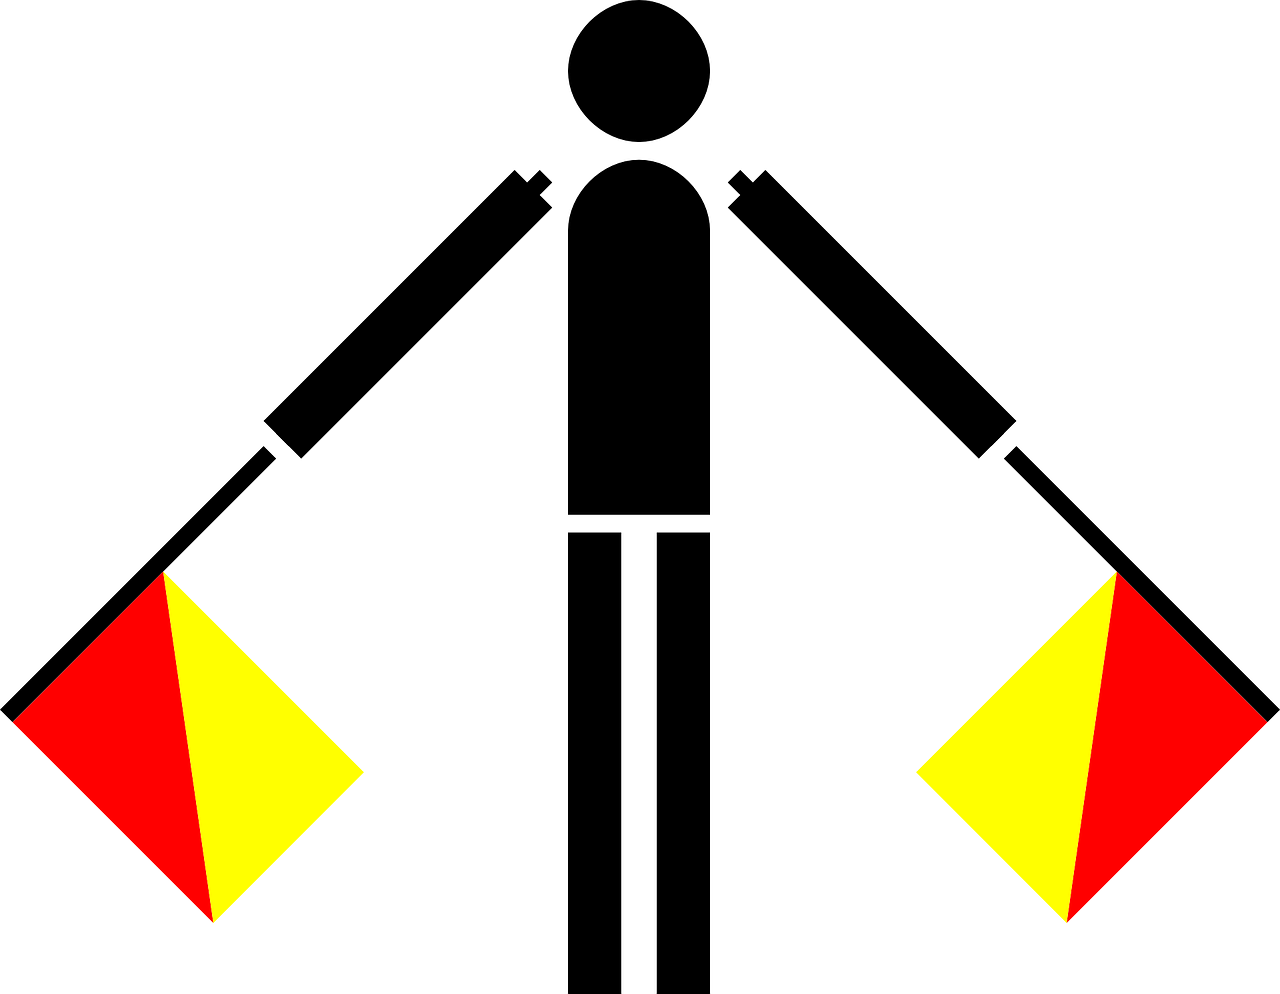 Semaphore Signals N (1280x994)